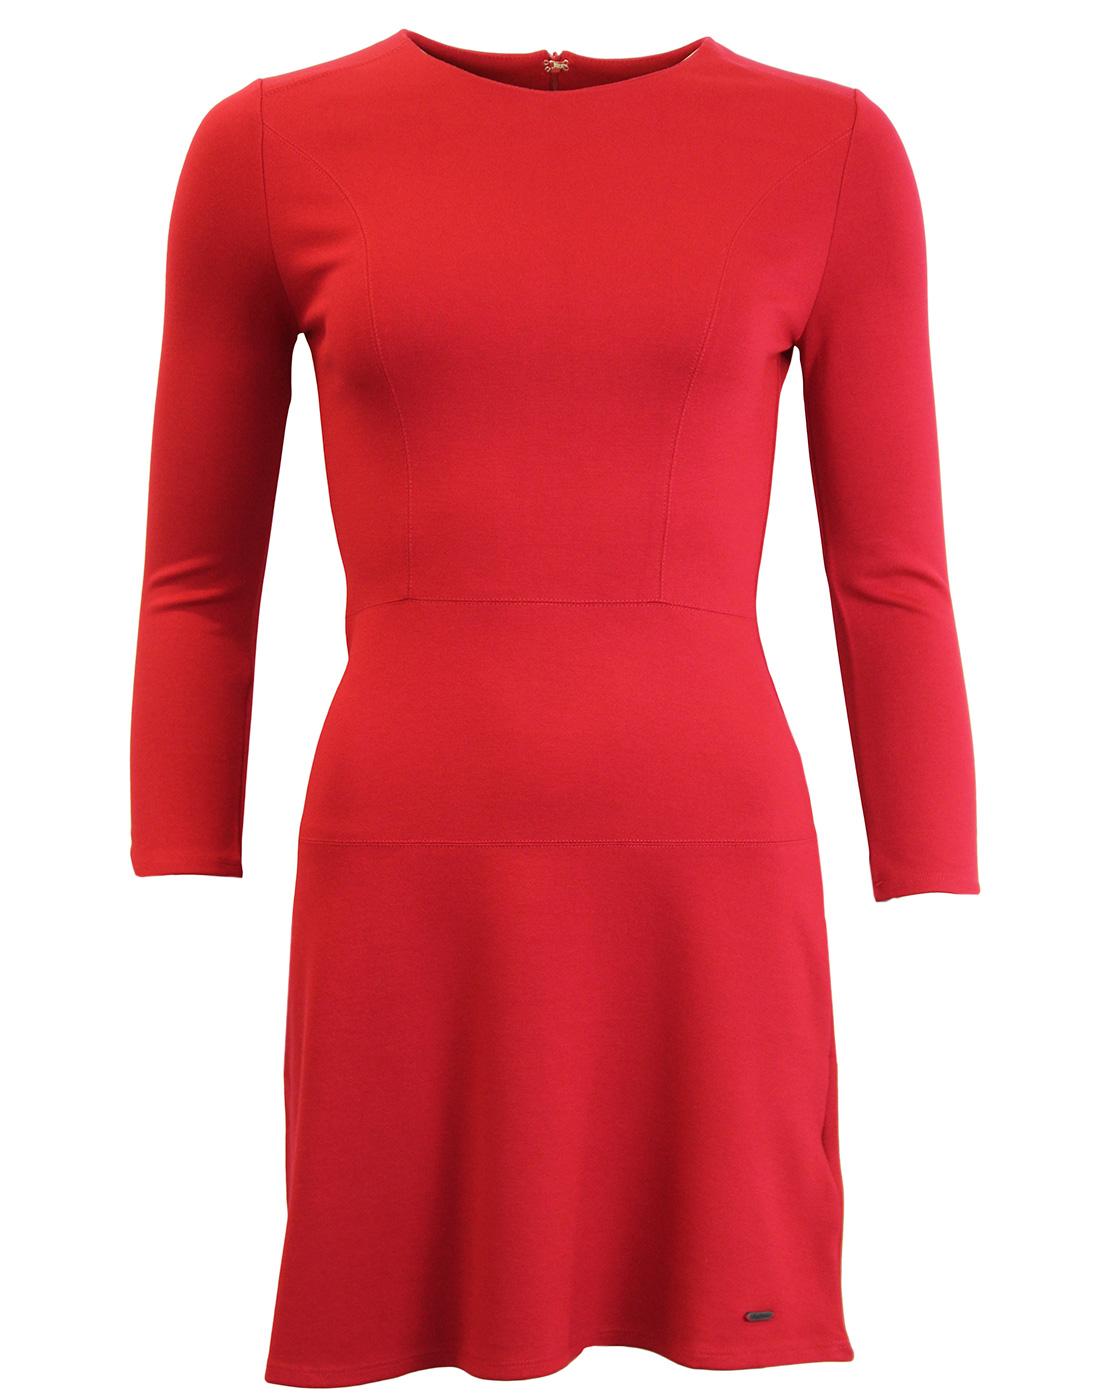 PEPE JEANS Freda Retro 60s Mod Panel Skater Dress in Red